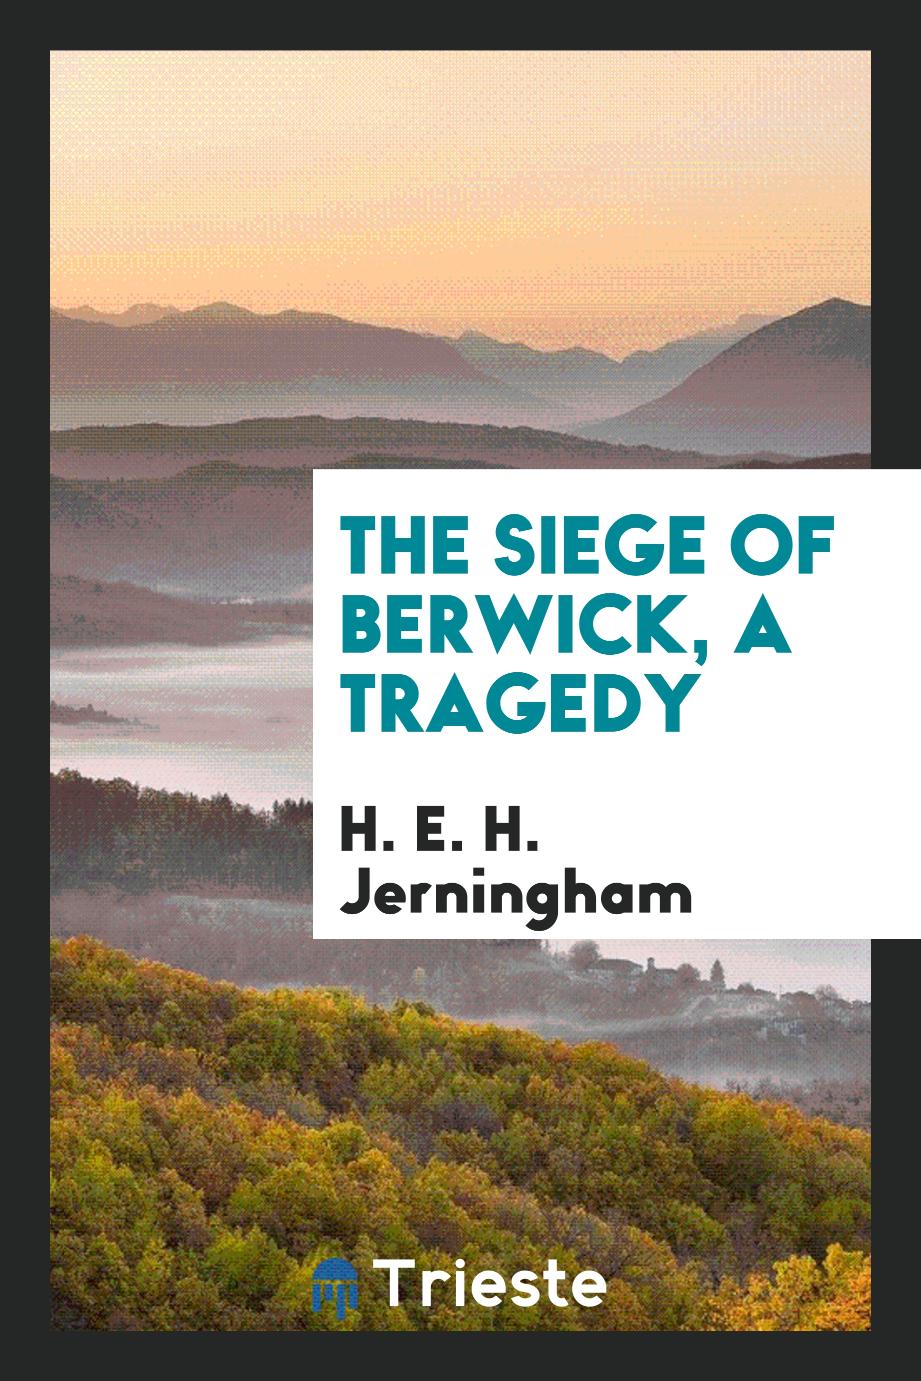 The Siege of Berwick, a Tragedy